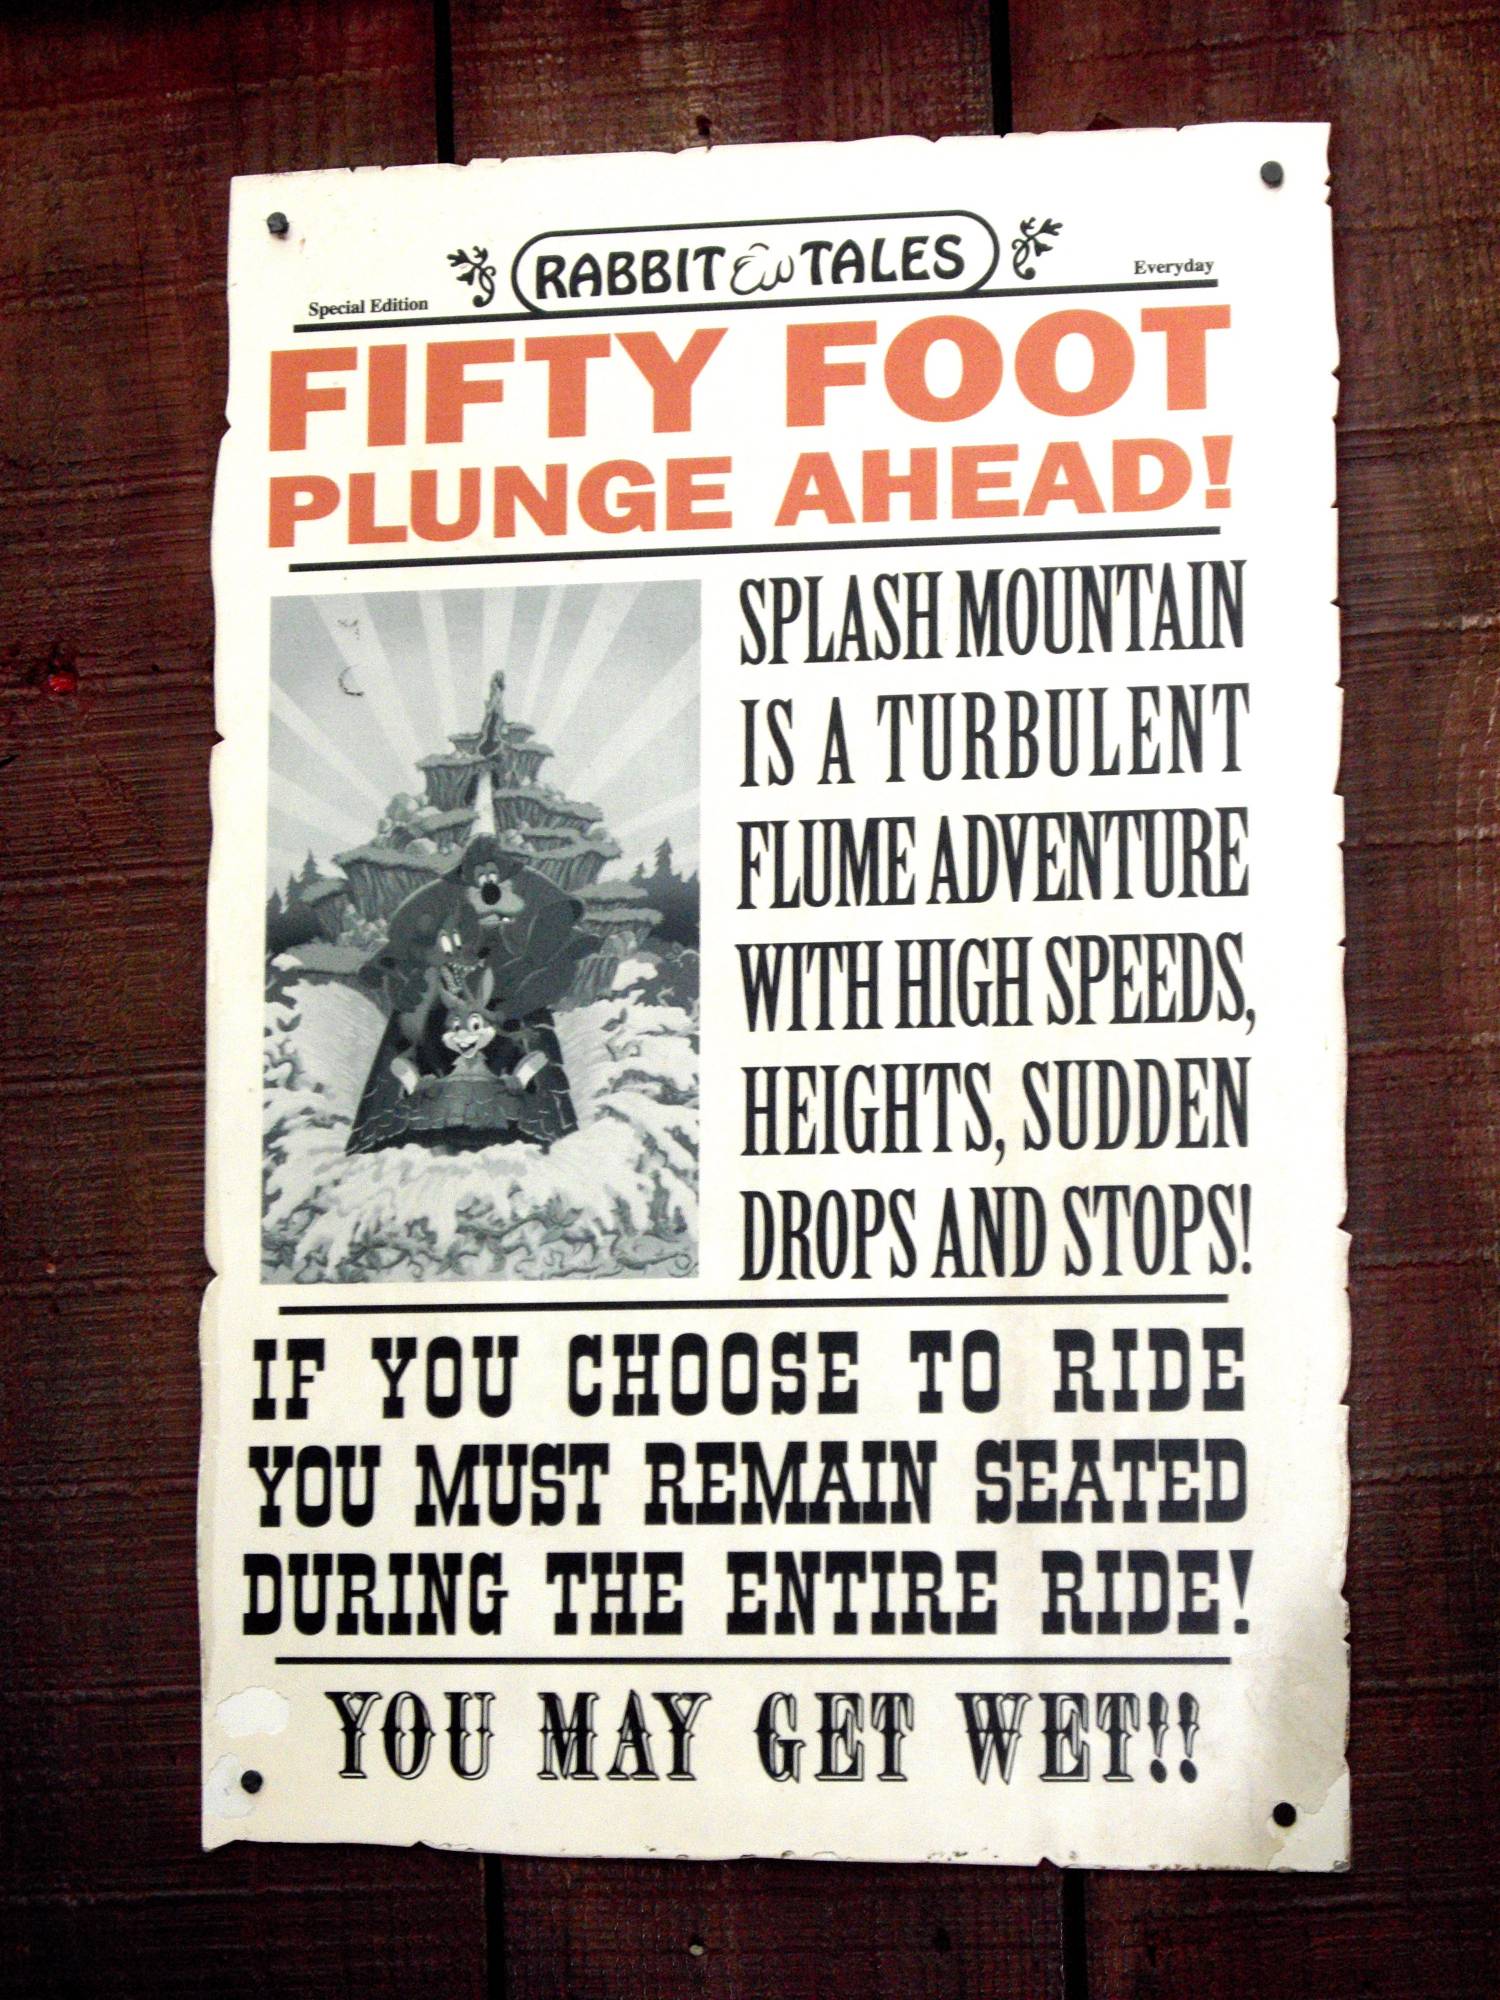 Magic Kingdom - Splash Mountain sign